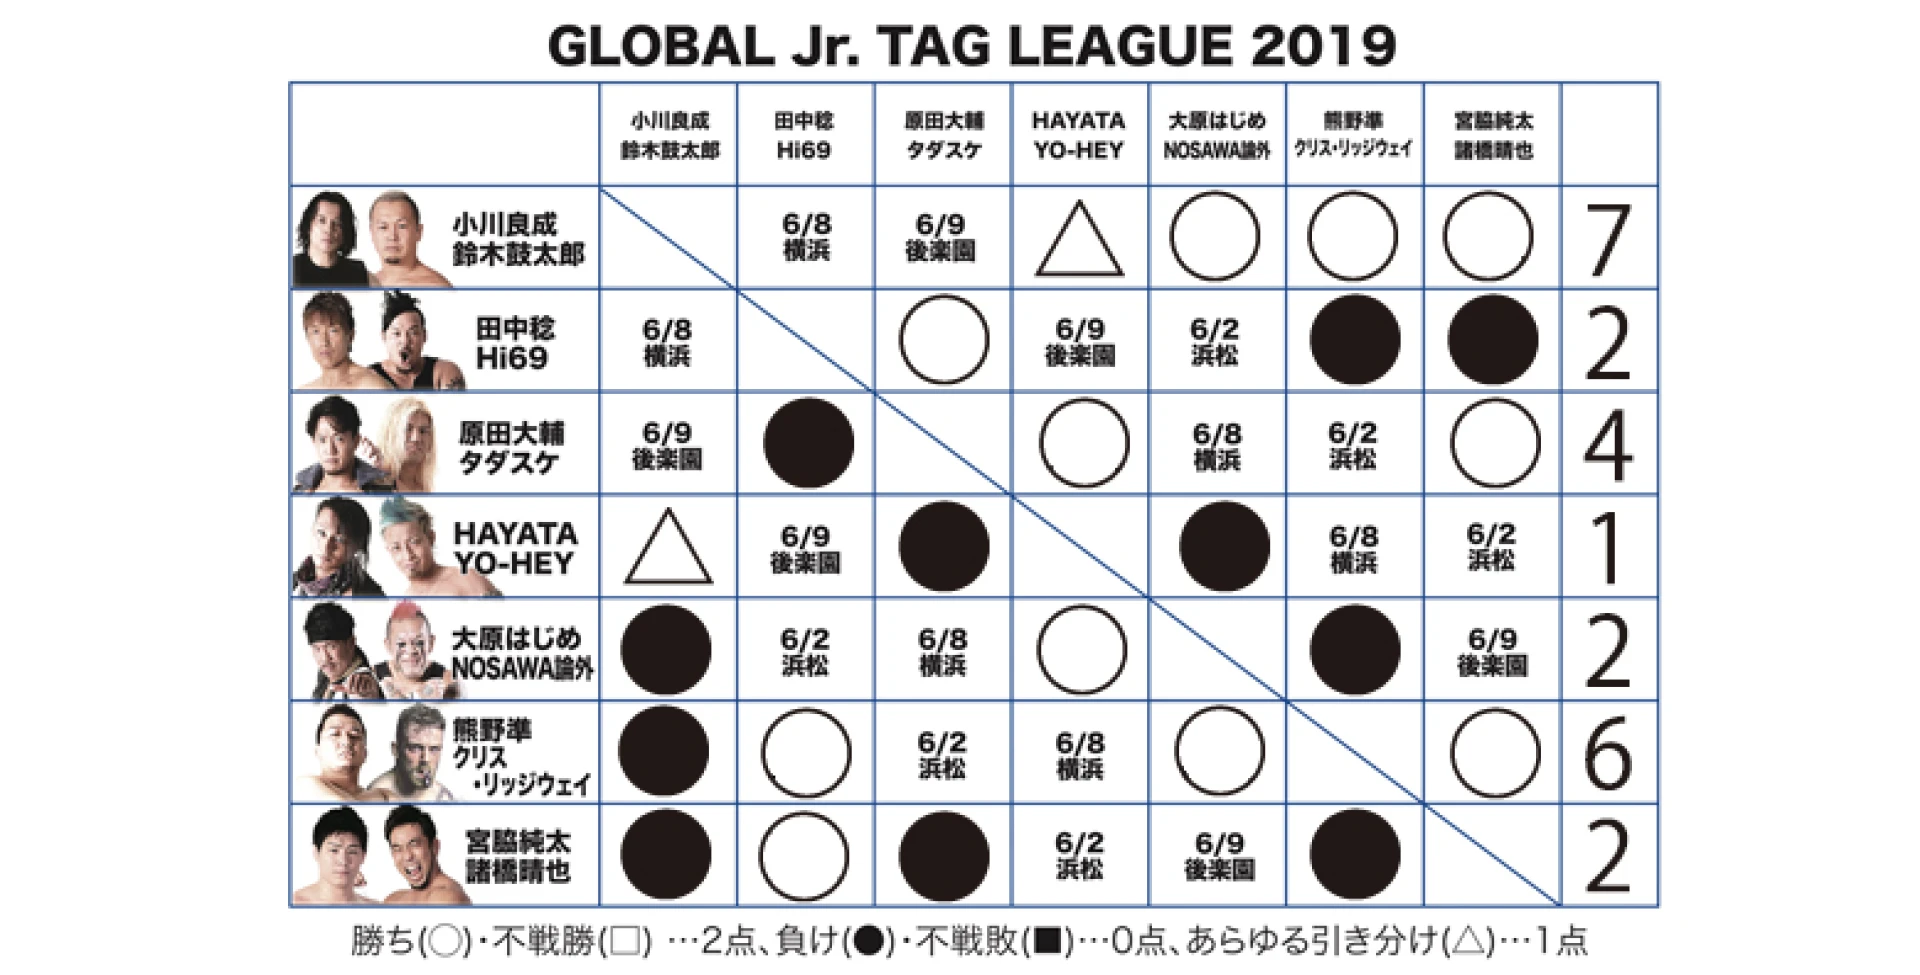 【6.1世界館大会終了時の得点状況】『GLOBAL Jr. TAG LEAGUE 2019』得点表